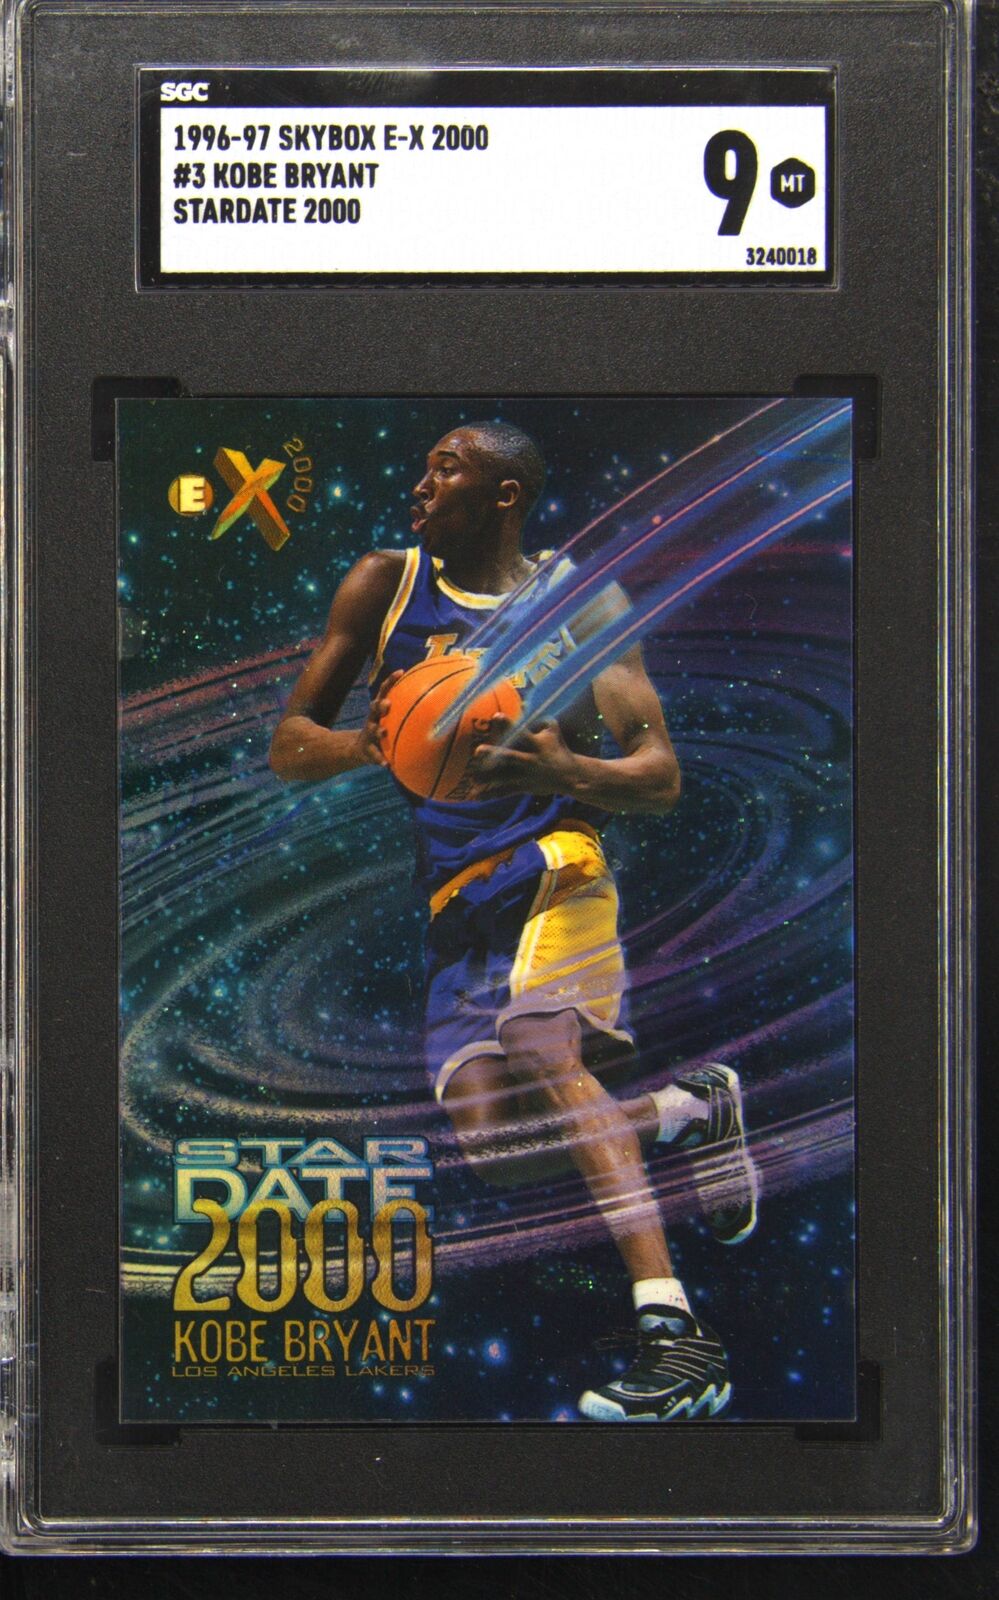 1996-97 Skybox E-X2000 Star Date 2000 #3 Kobe Bryant Rookie SGC 9